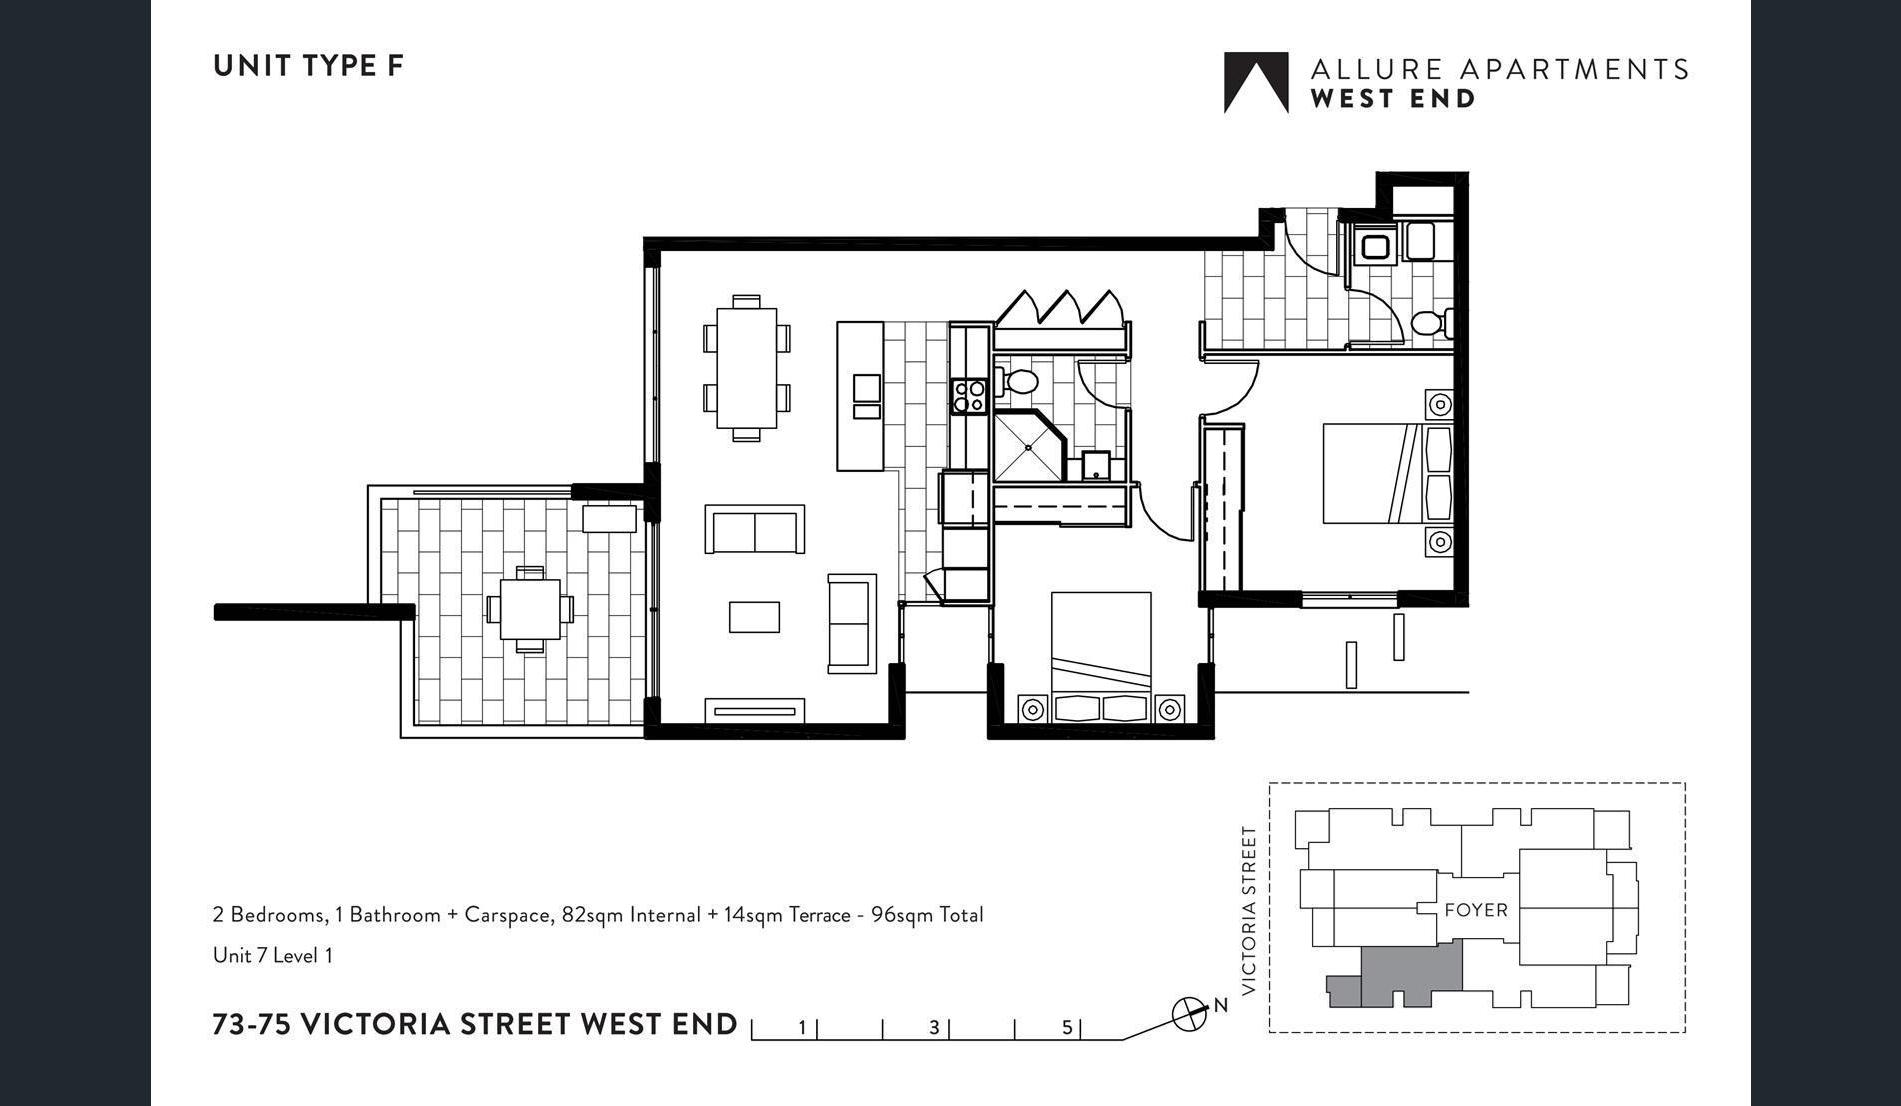 Allure Apartments West End Floorplan F